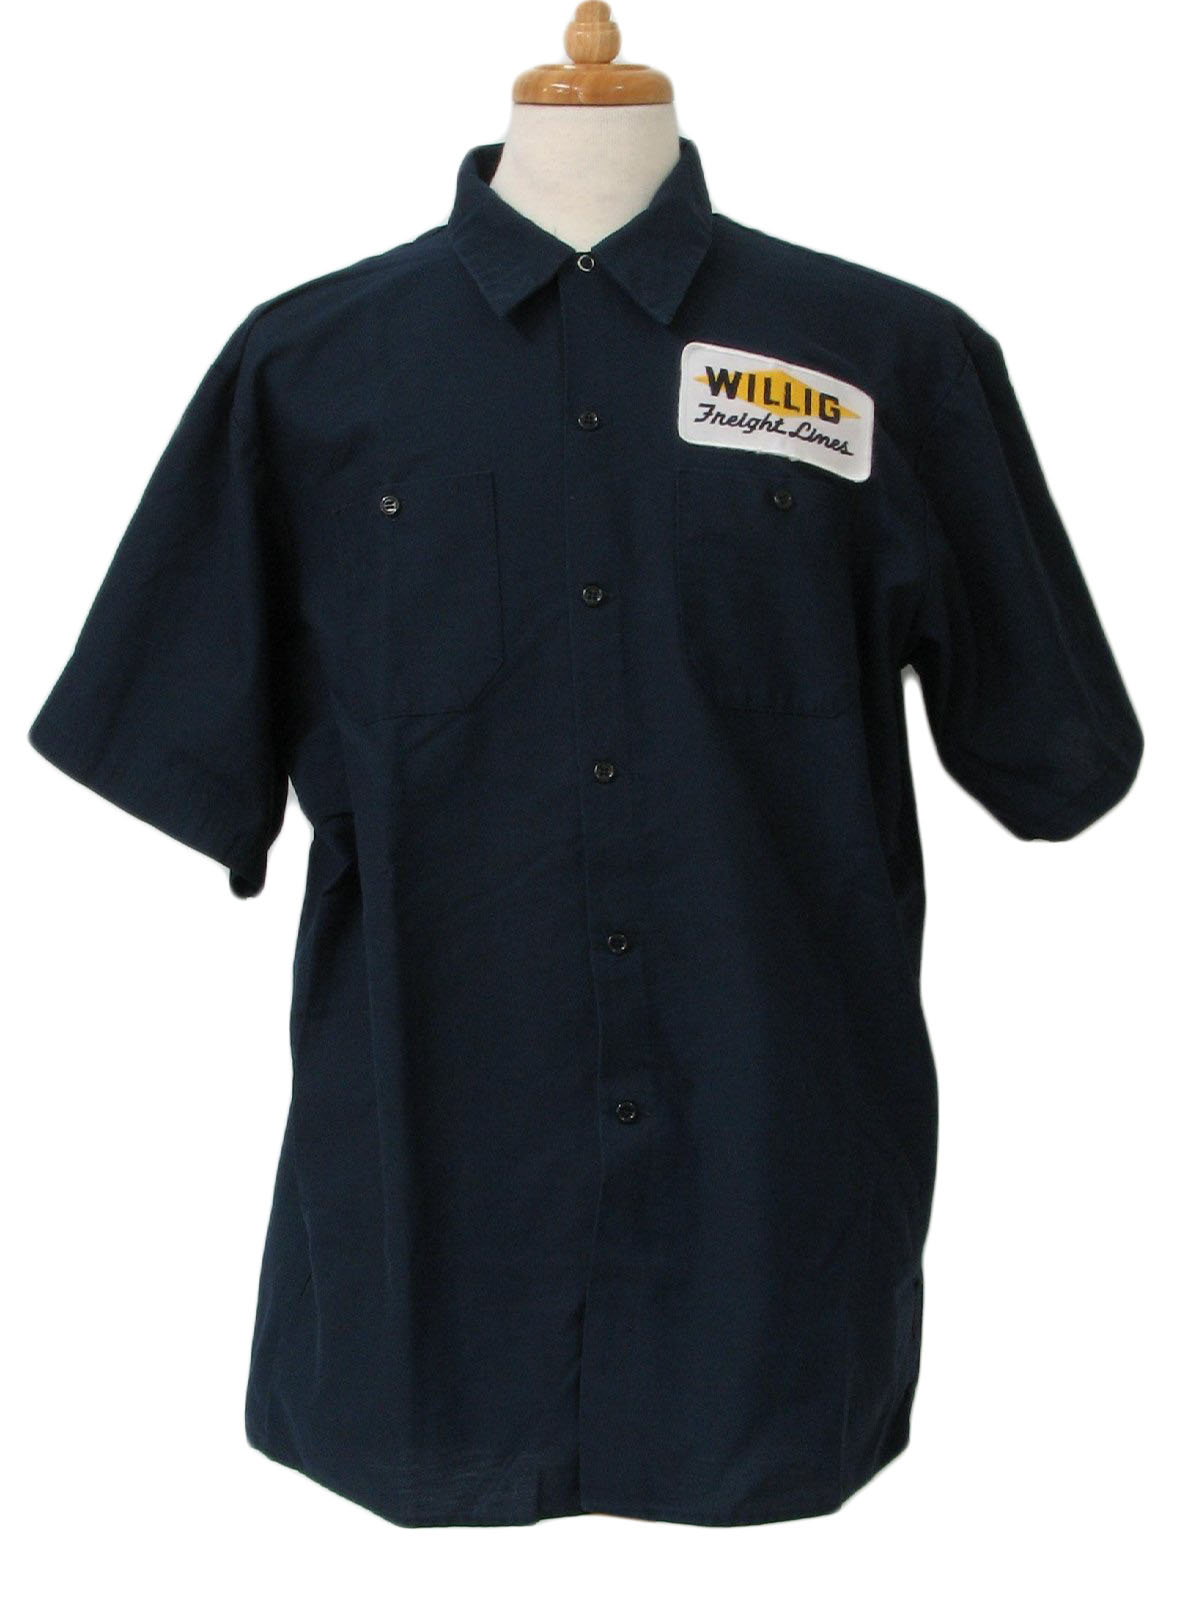 Vintage Work Wear Eighties Shirt: 80s -Work Wear- Mens navy blue short ...